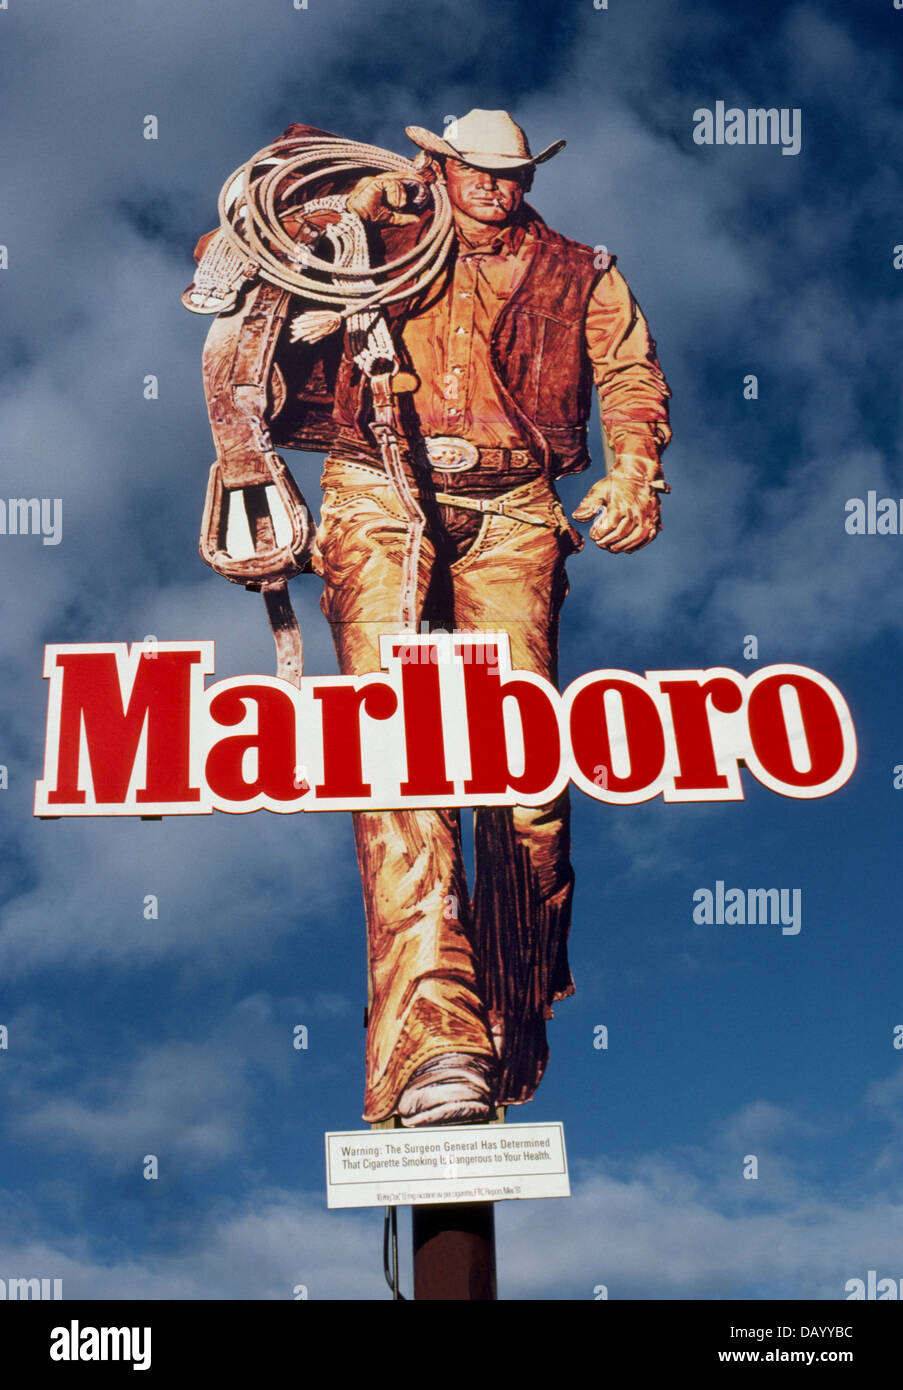 Marlboro man hi-res stock photography and images - Alamy